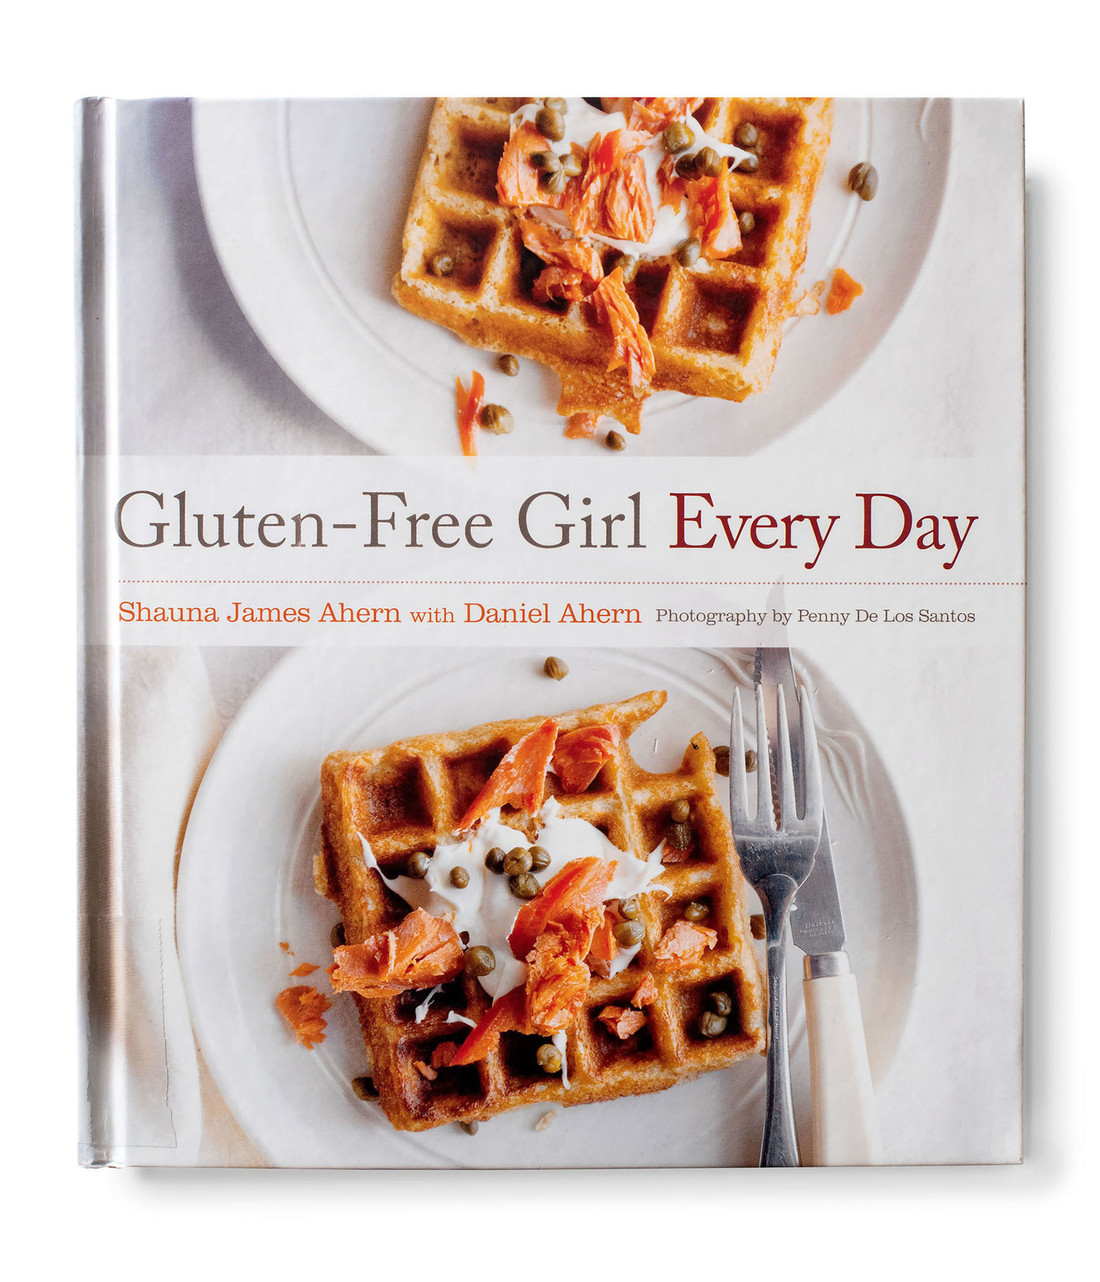 Gluten-Free Girl Every Day cookbook